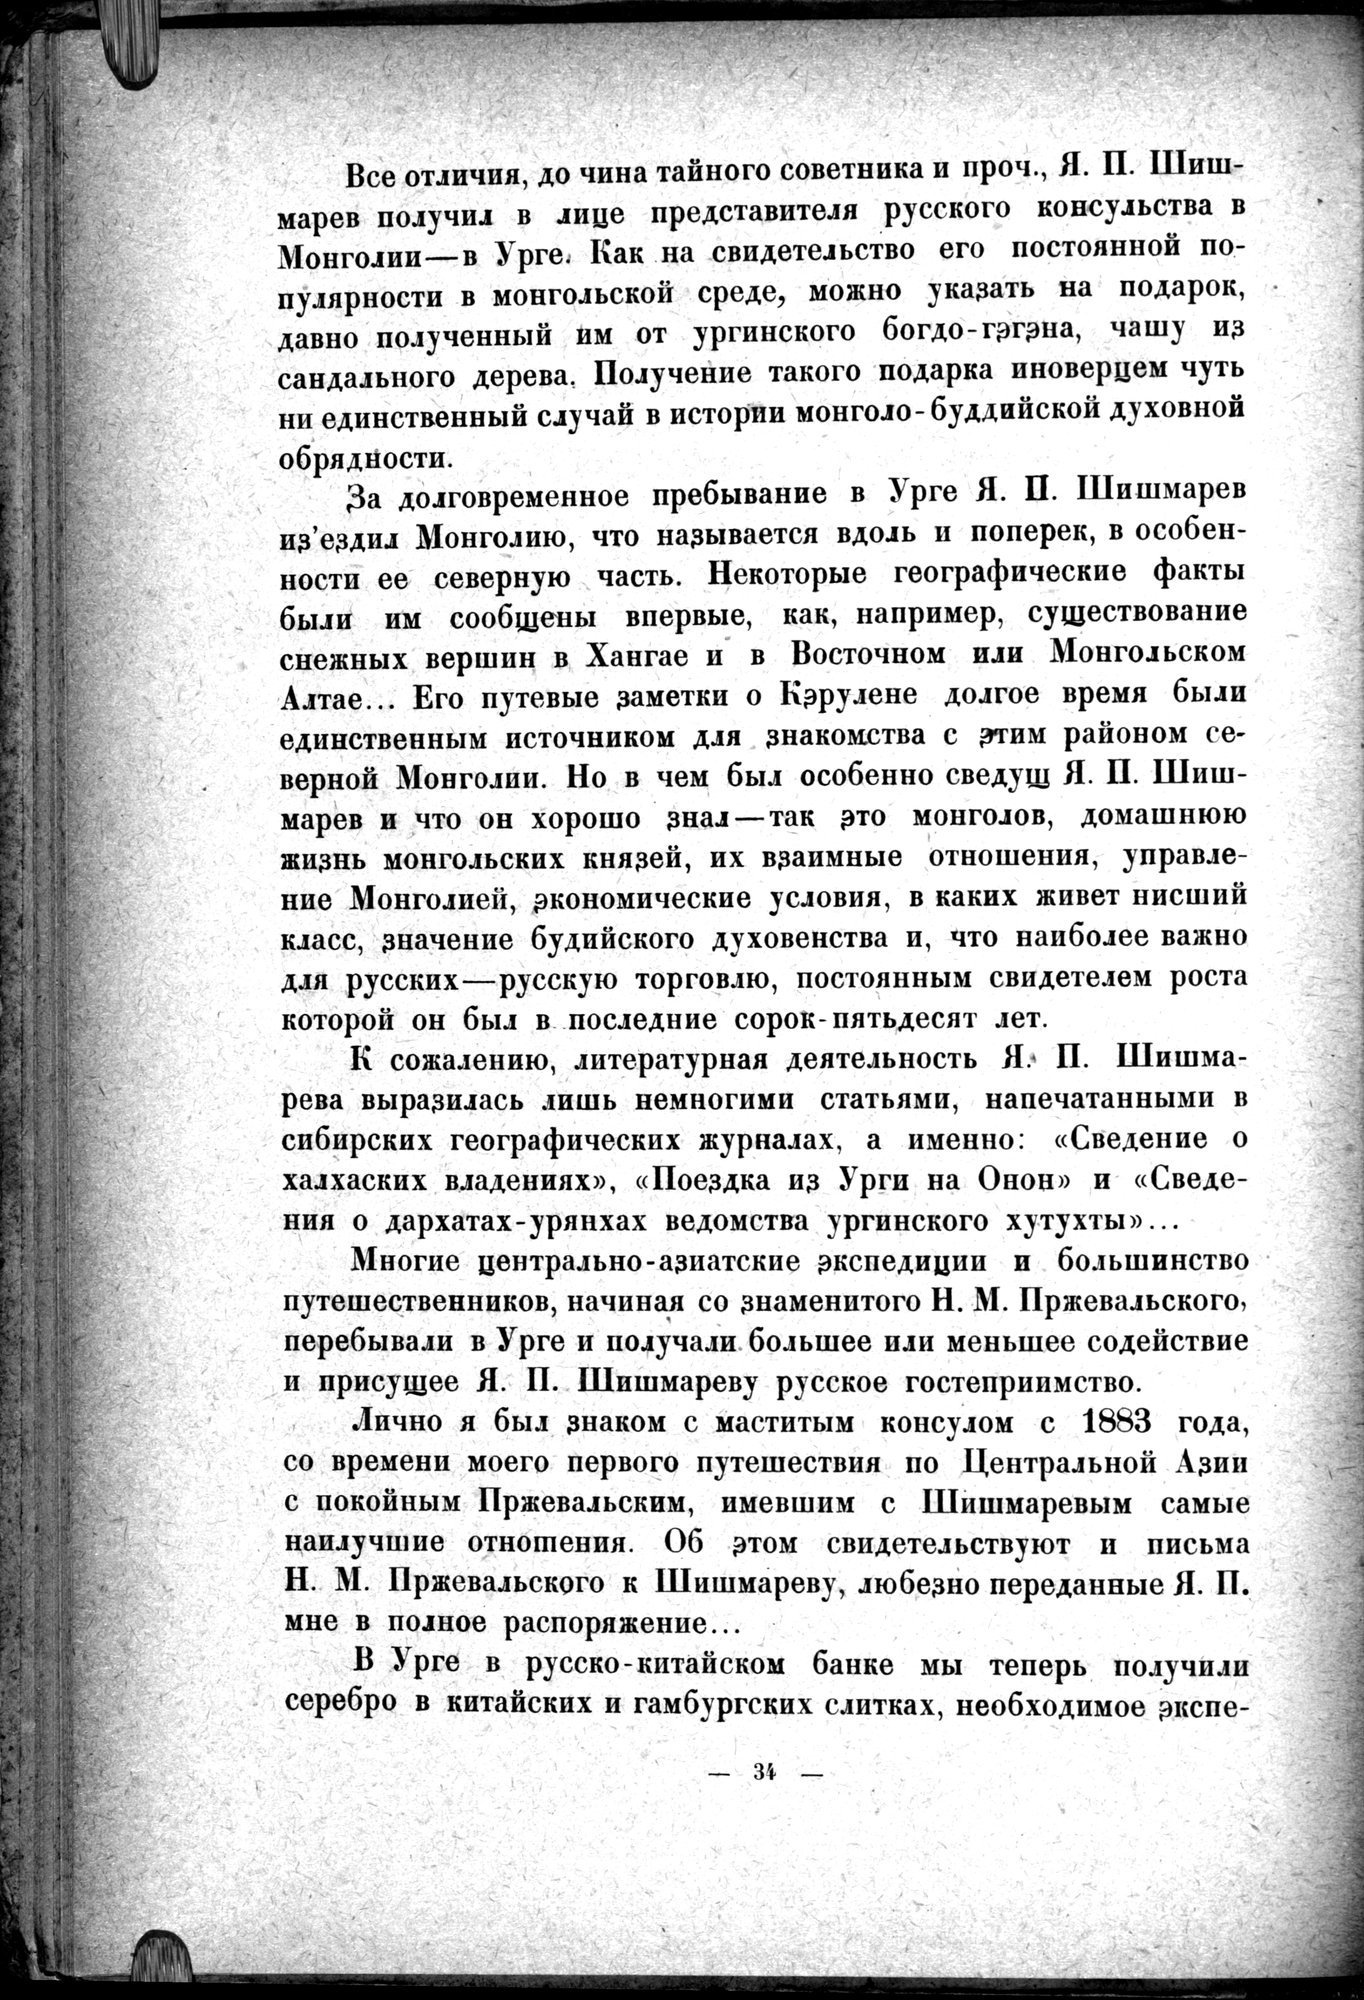 Mongoliya i Amdo i mertby gorod Khara-Khoto : vol.1 / Page 54 (Grayscale High Resolution Image)